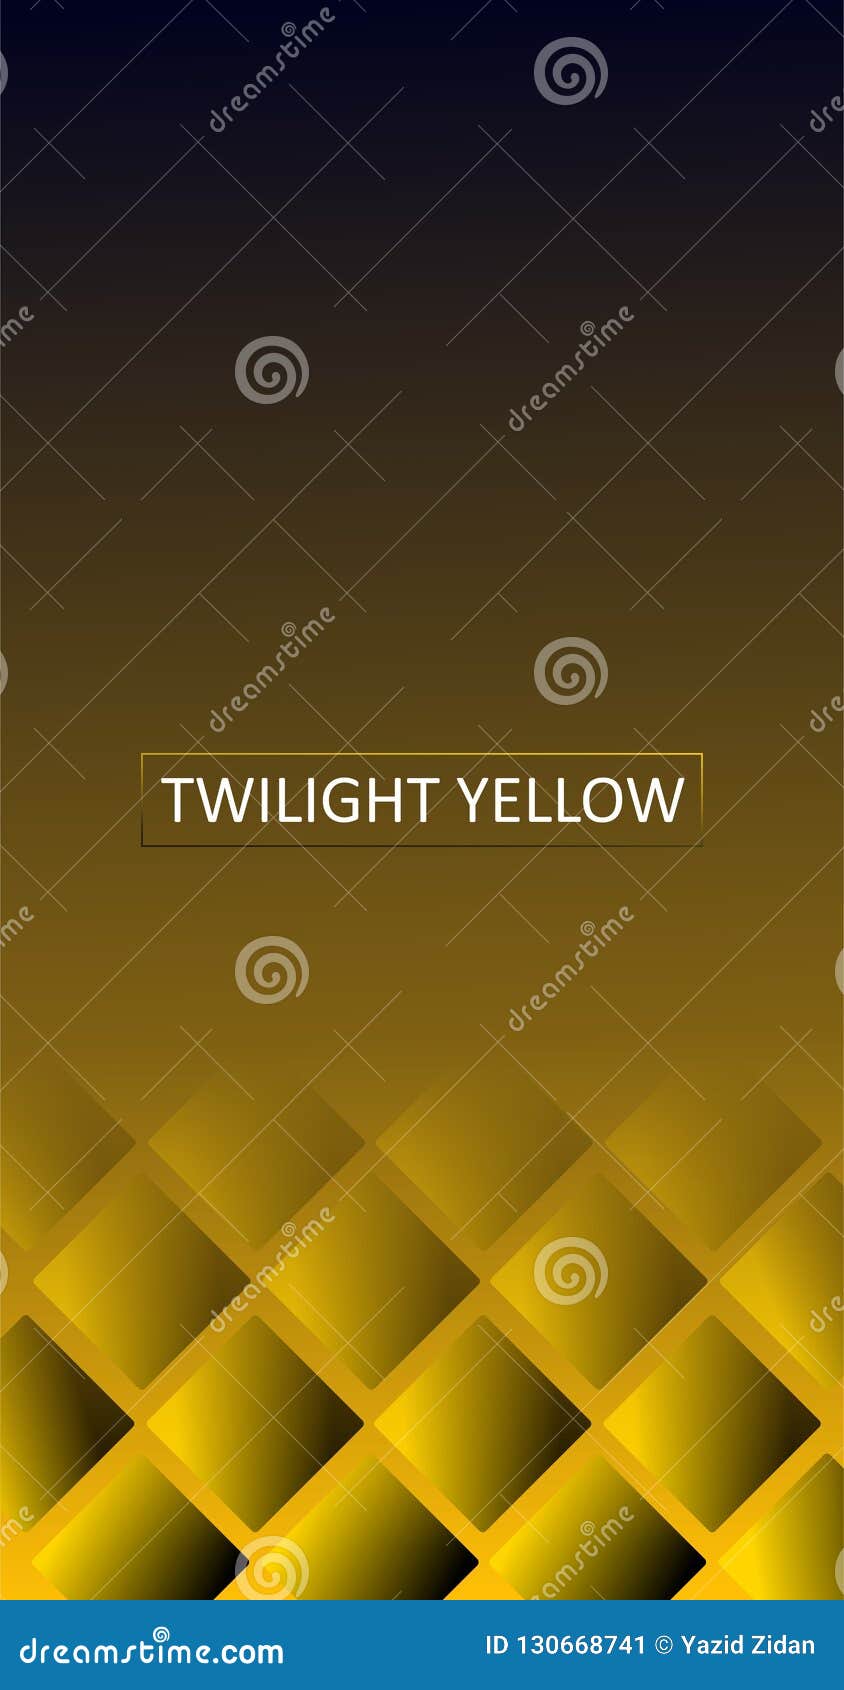 Best Twilight iPhone HD Wallpapers  iLikeWallpaper